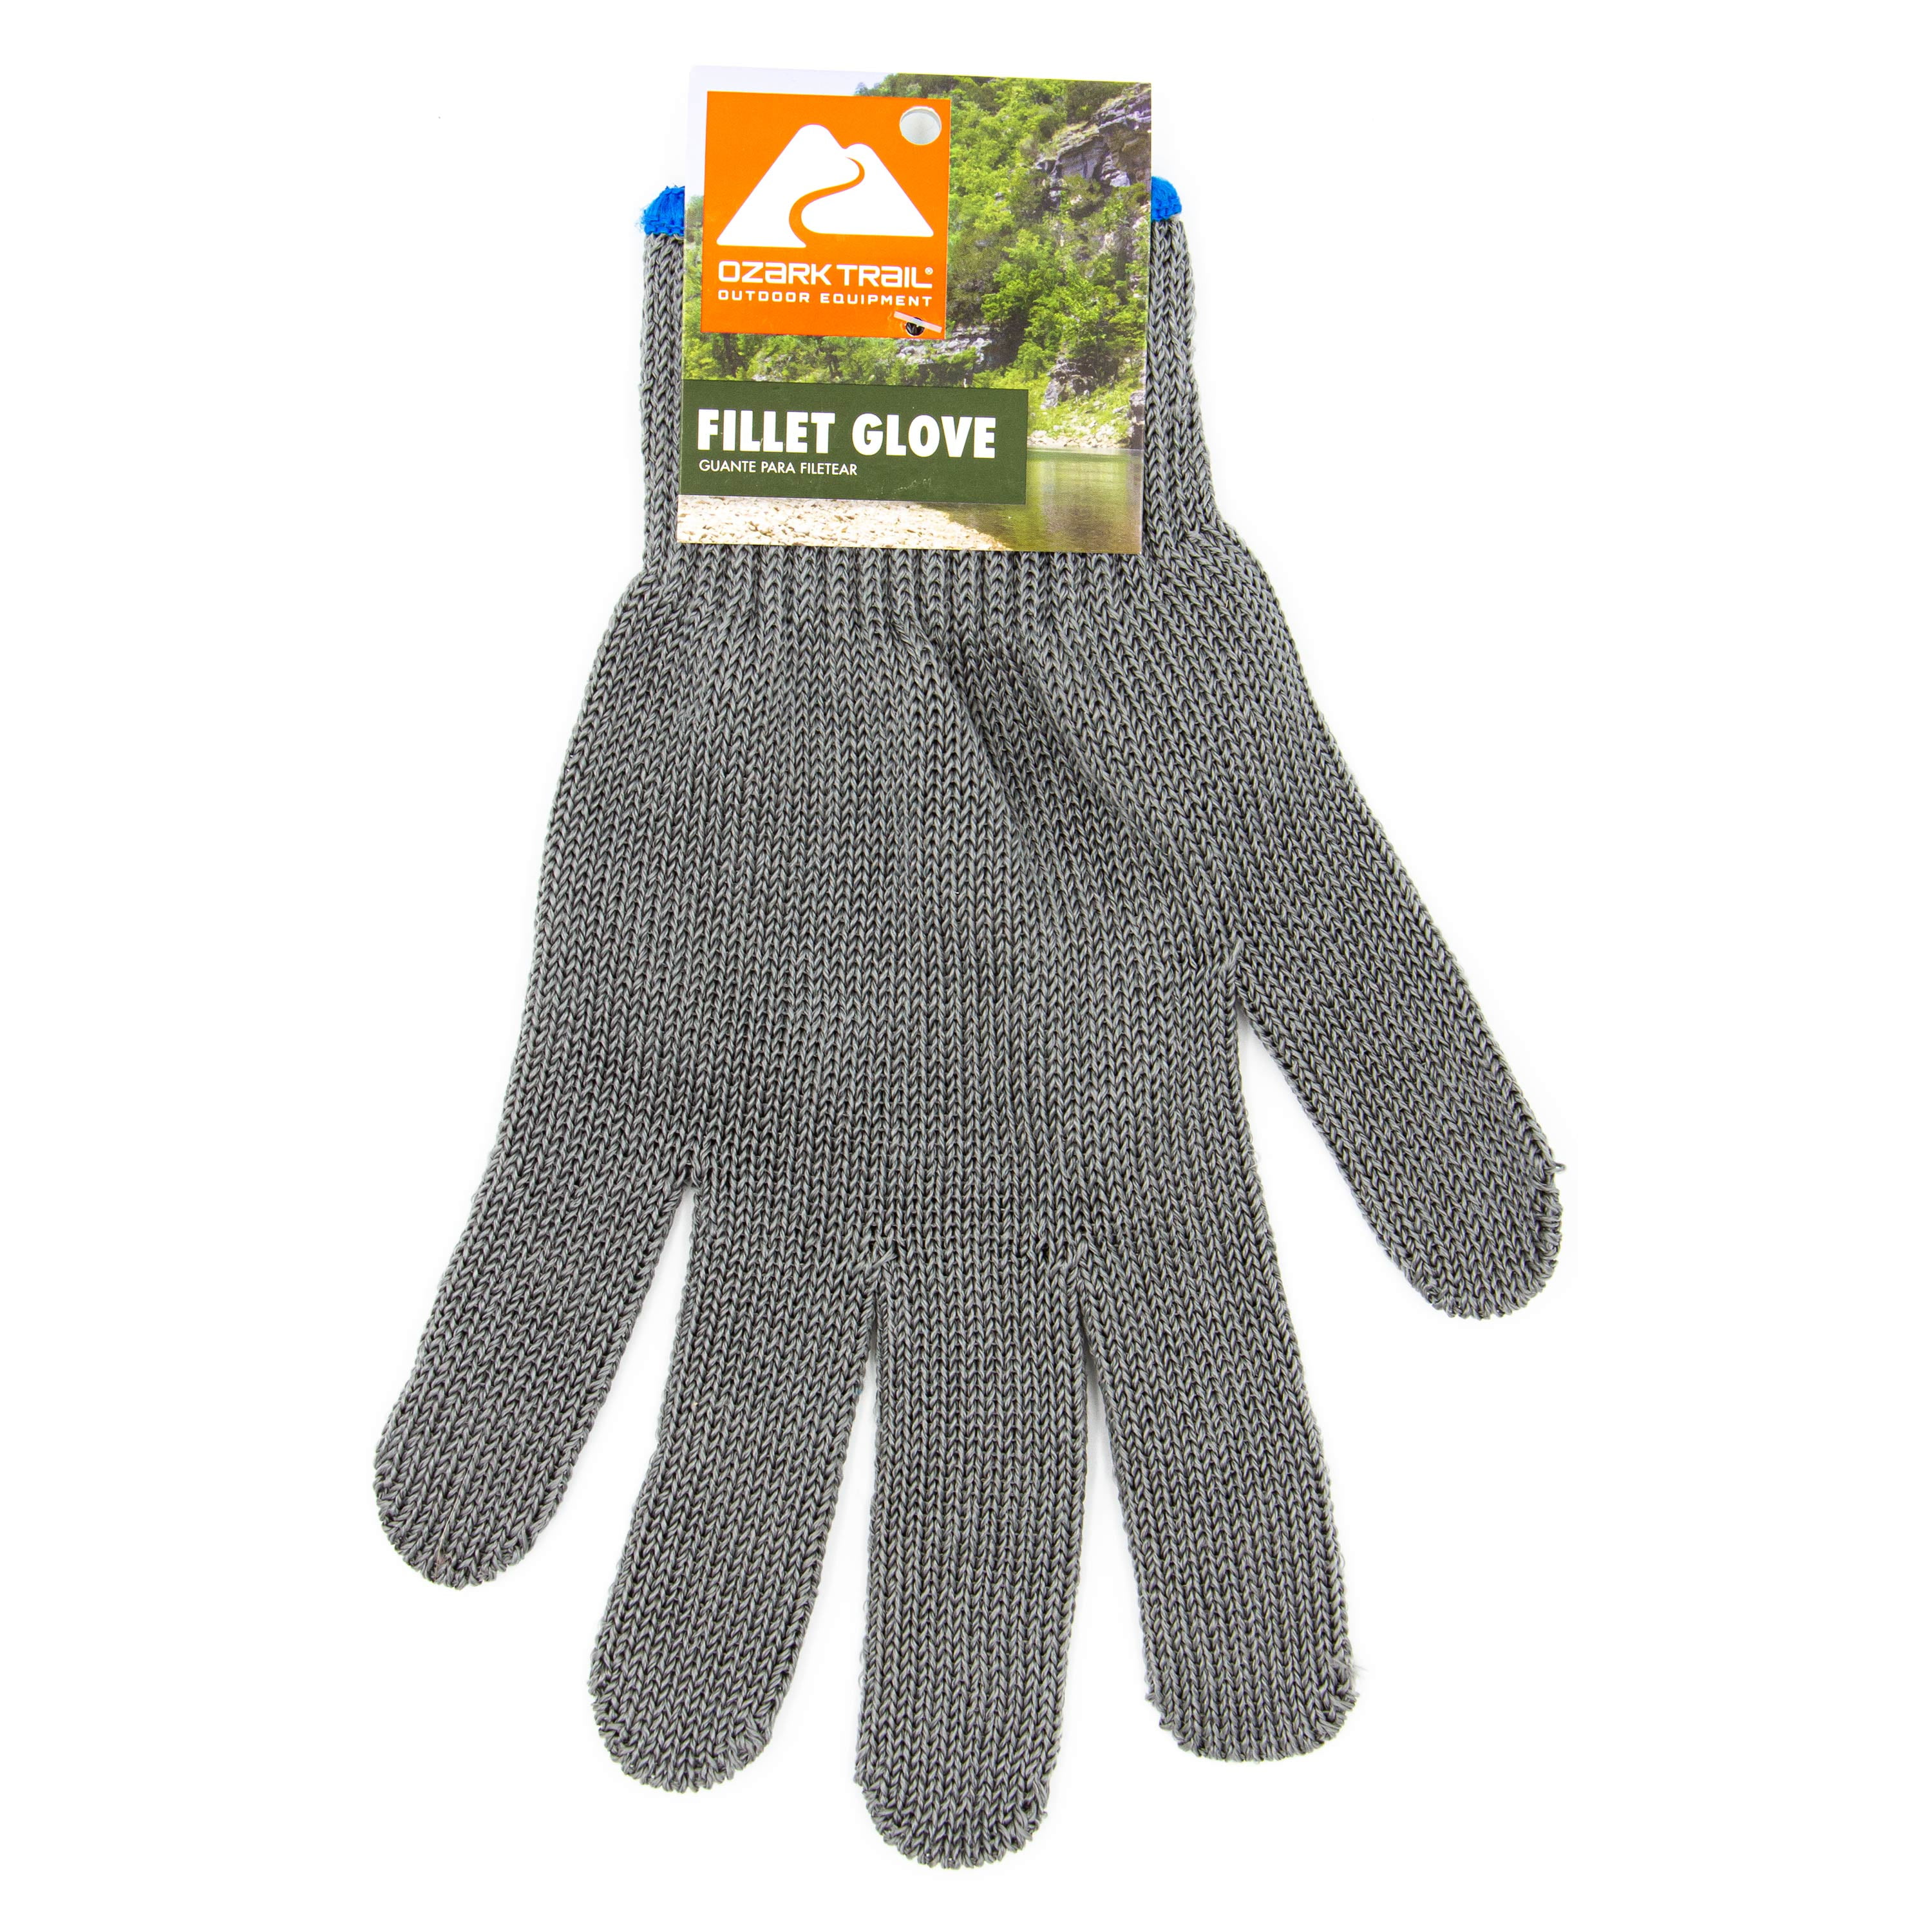 Ozark Trail Adult Cut-Resistant Fish Fillet Glove $2.65 + Free Shipping w/ Walmart+ or $35+